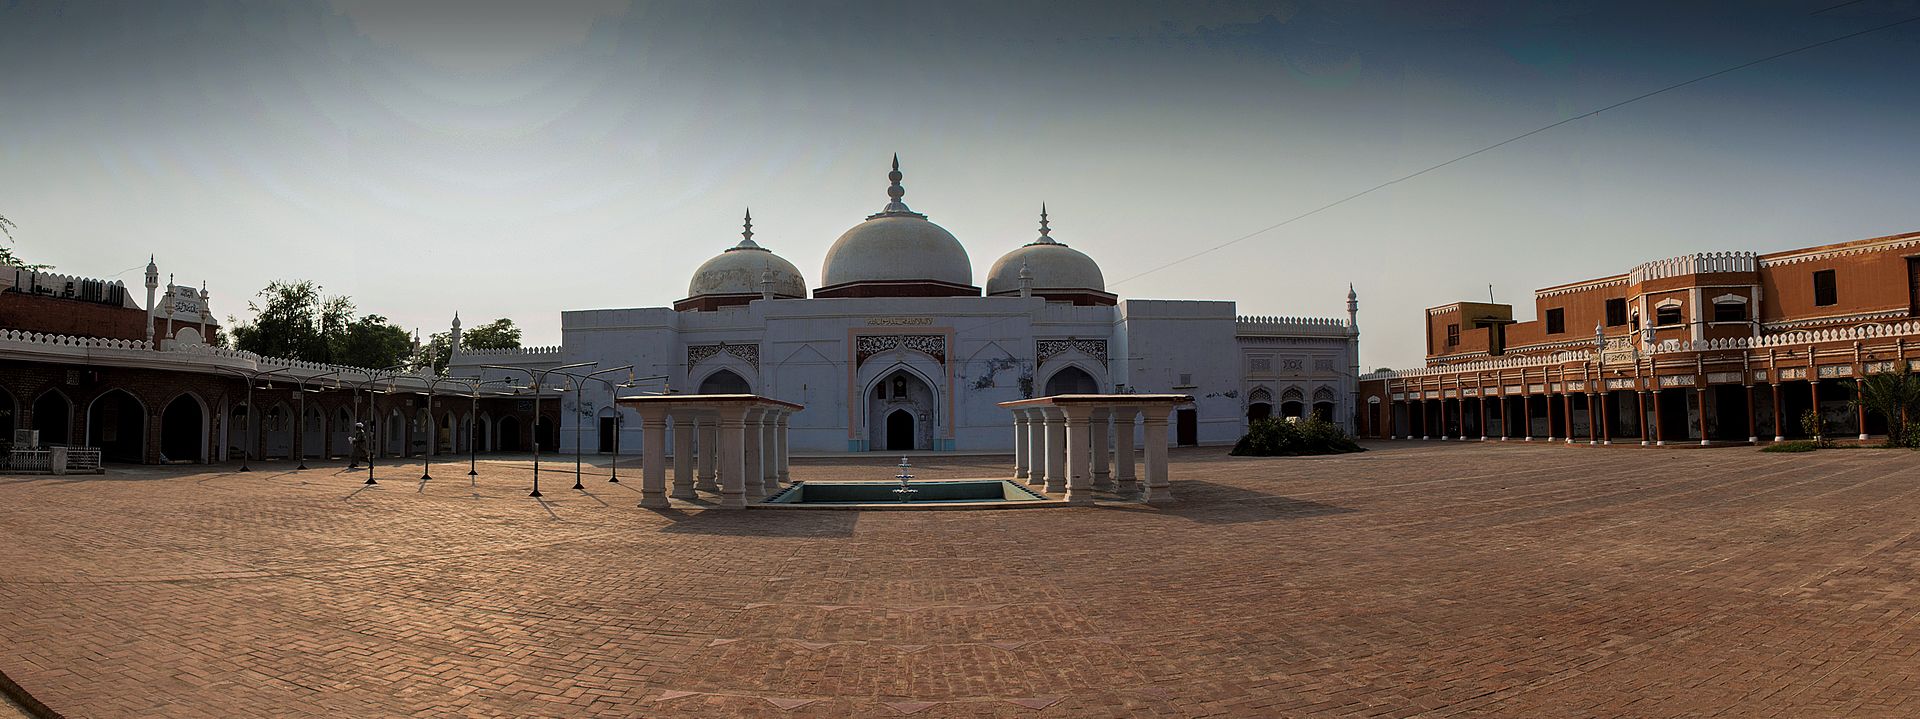 Sher Shah Suri Jama Masjid